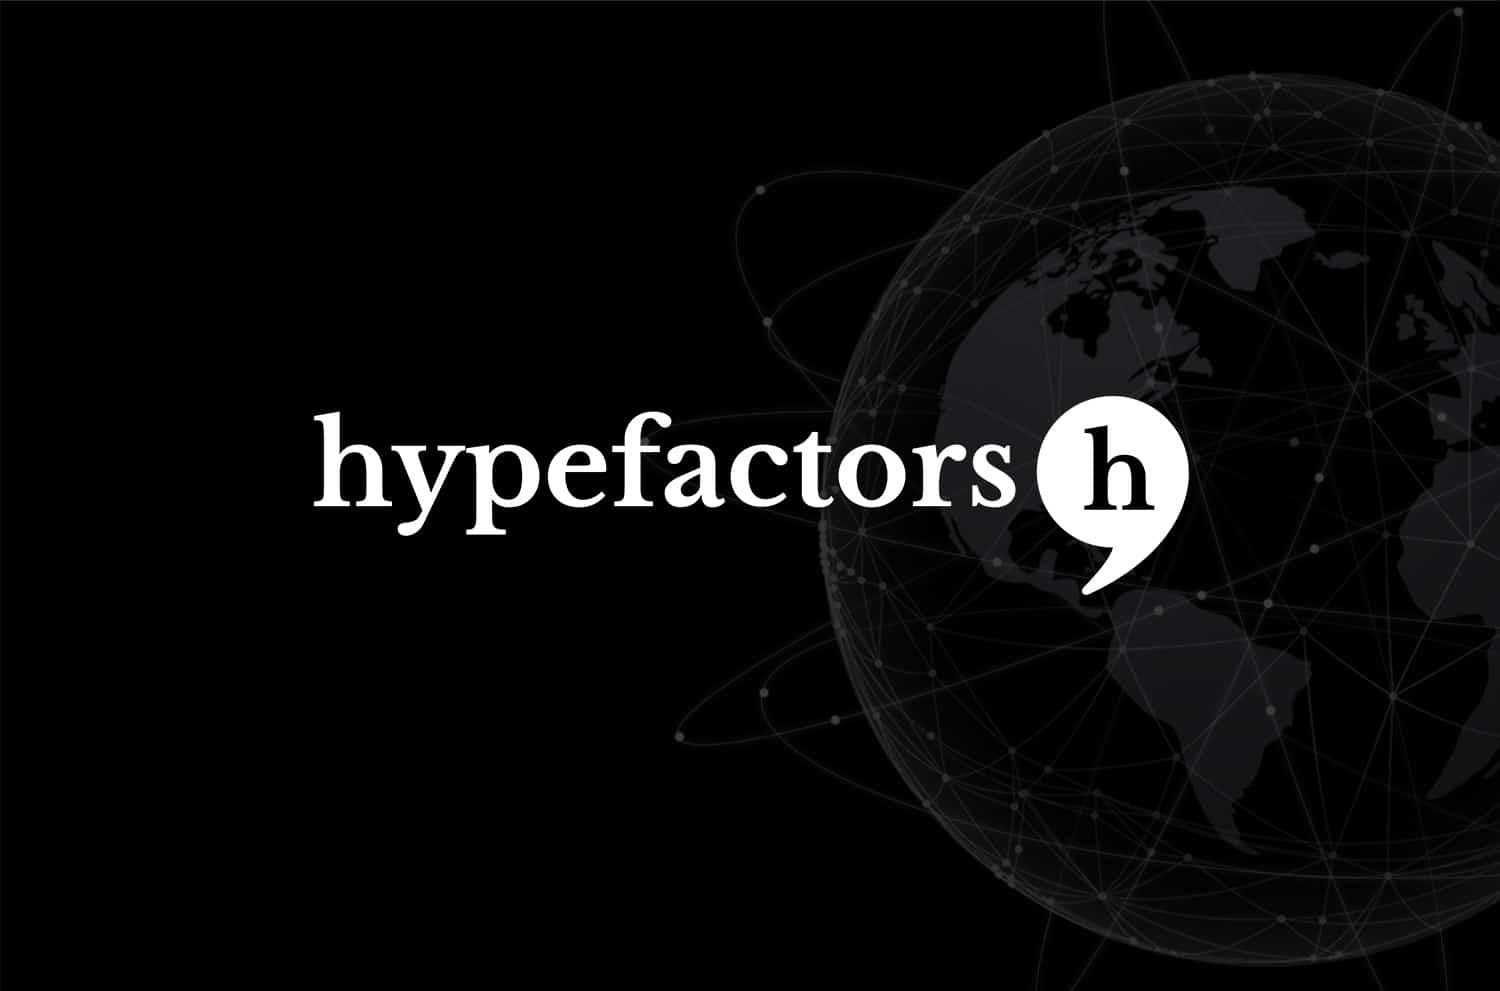 Hypefactors styrker bestyrelsen